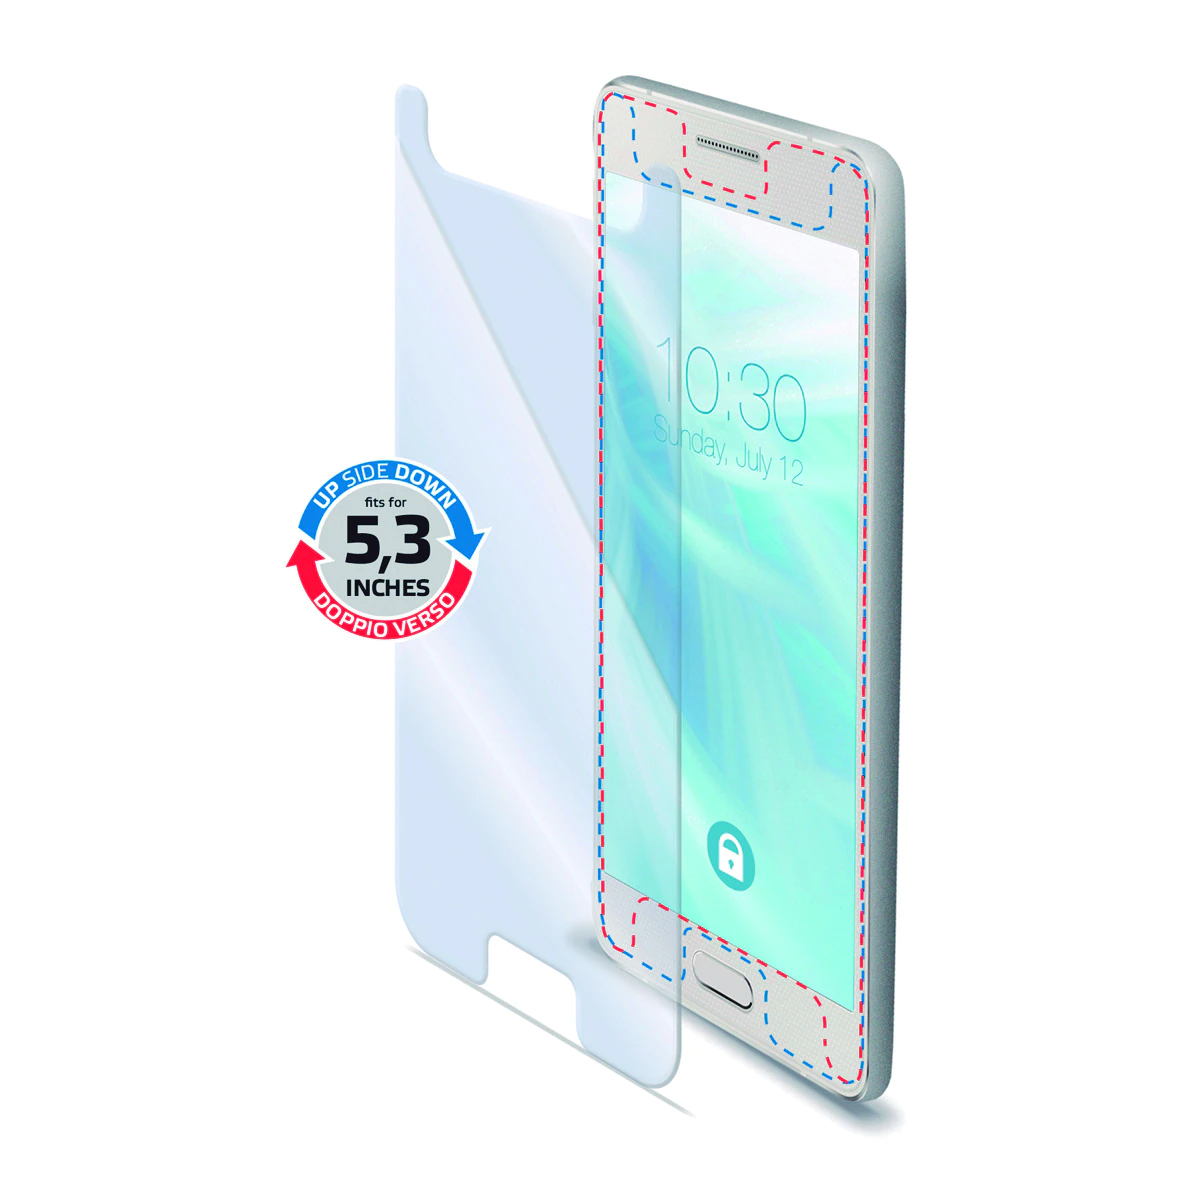 Protector de Cristal Universal para smartphones 5″3